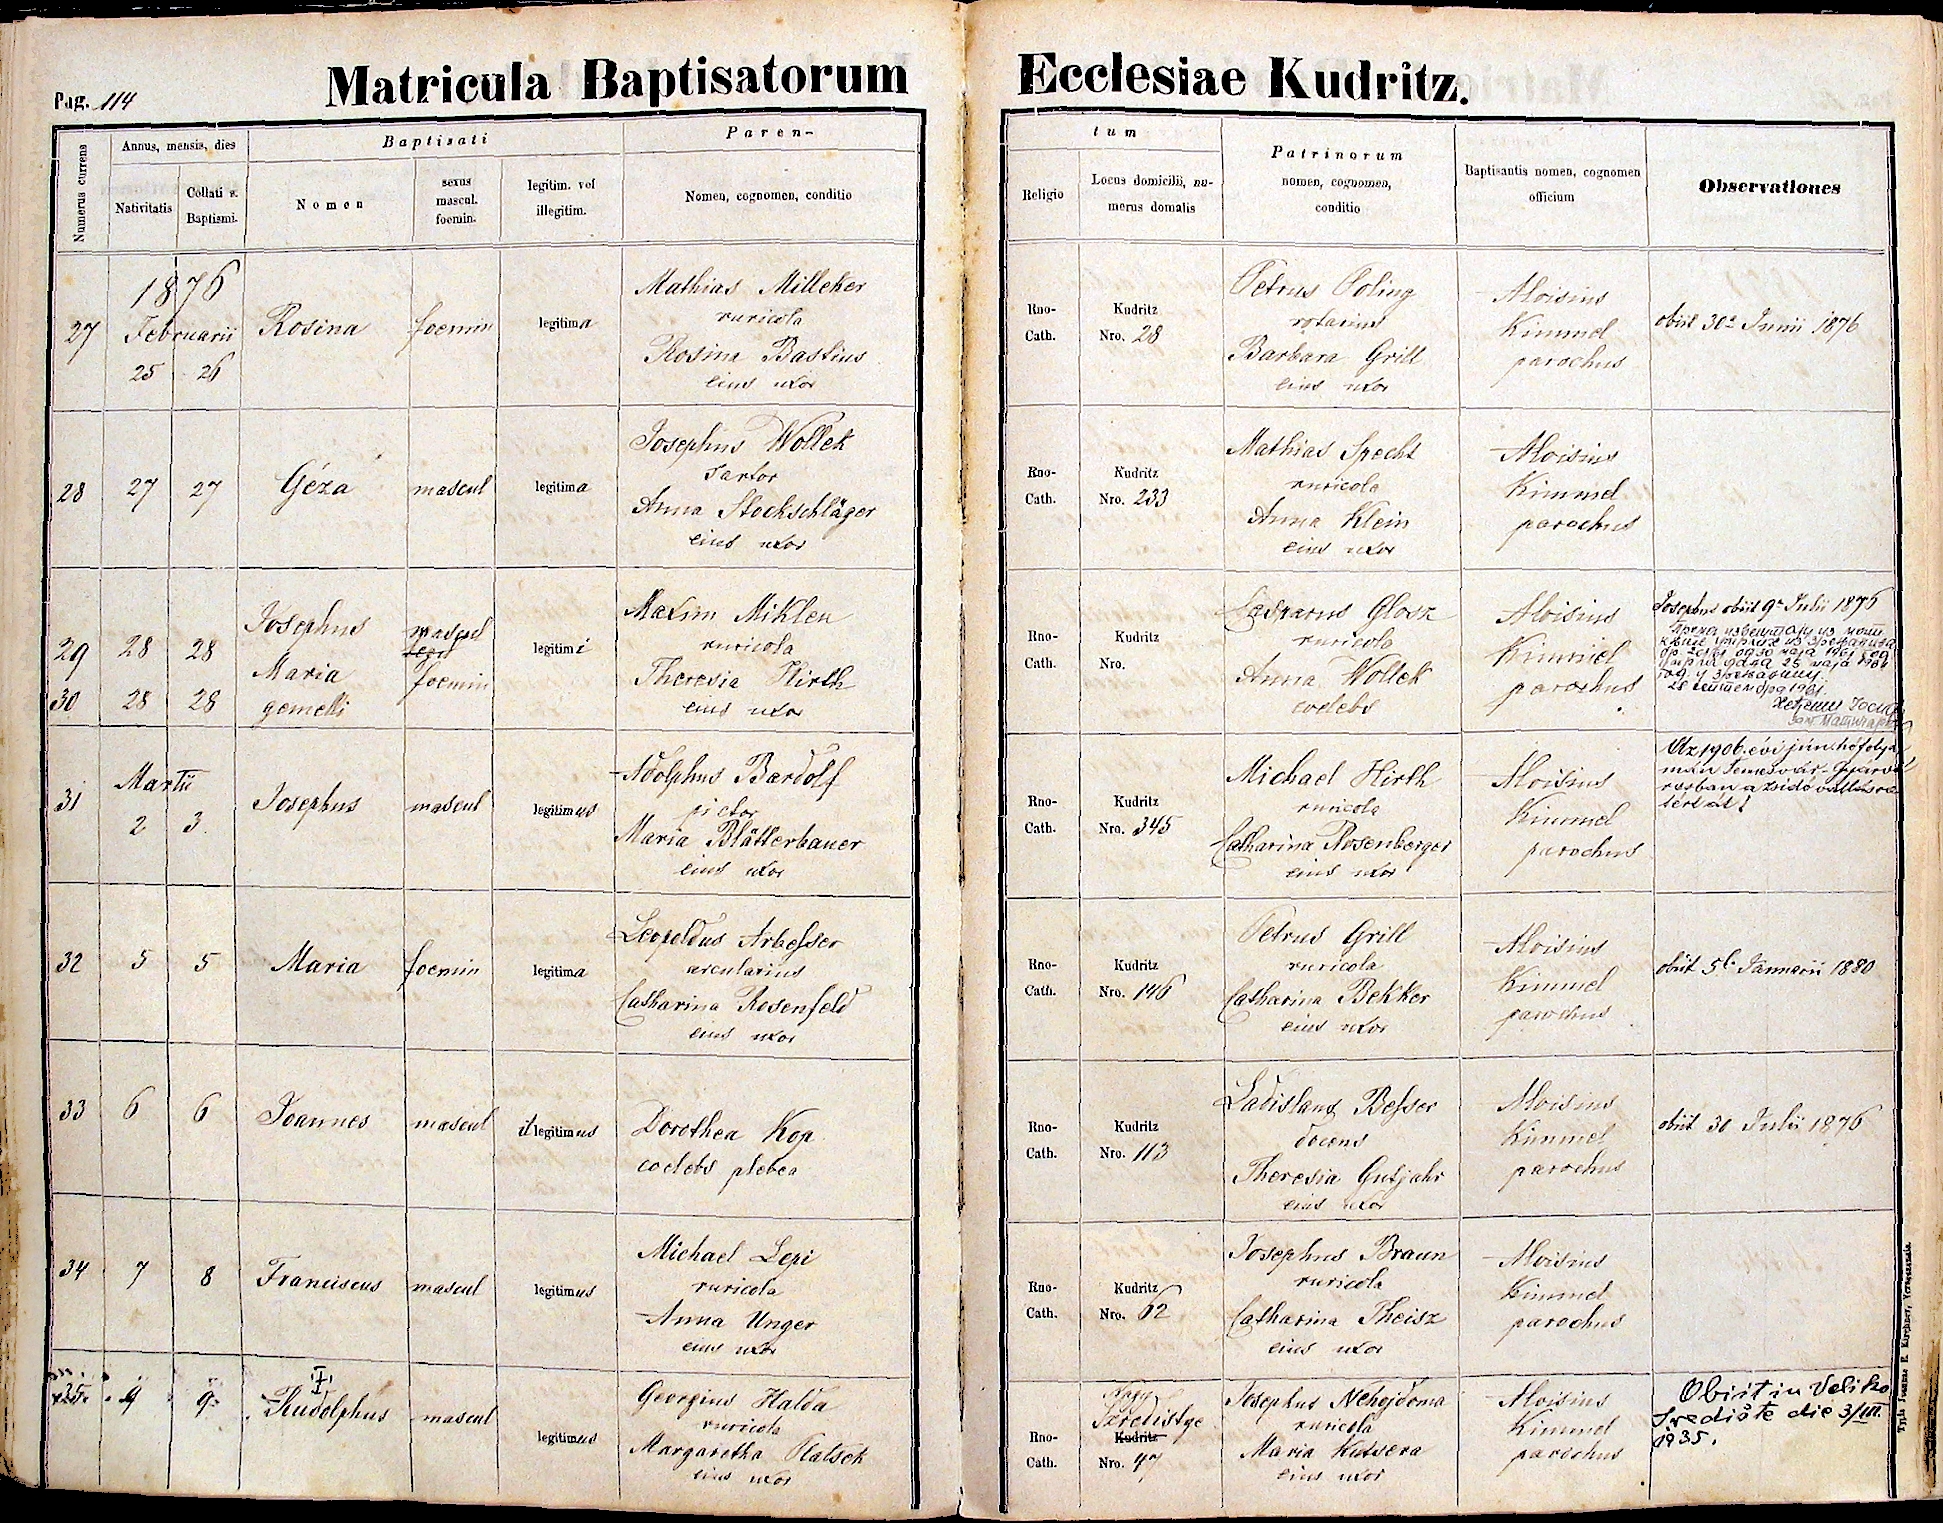 images/church_records/BIRTHS/1884-1899B/1891/114